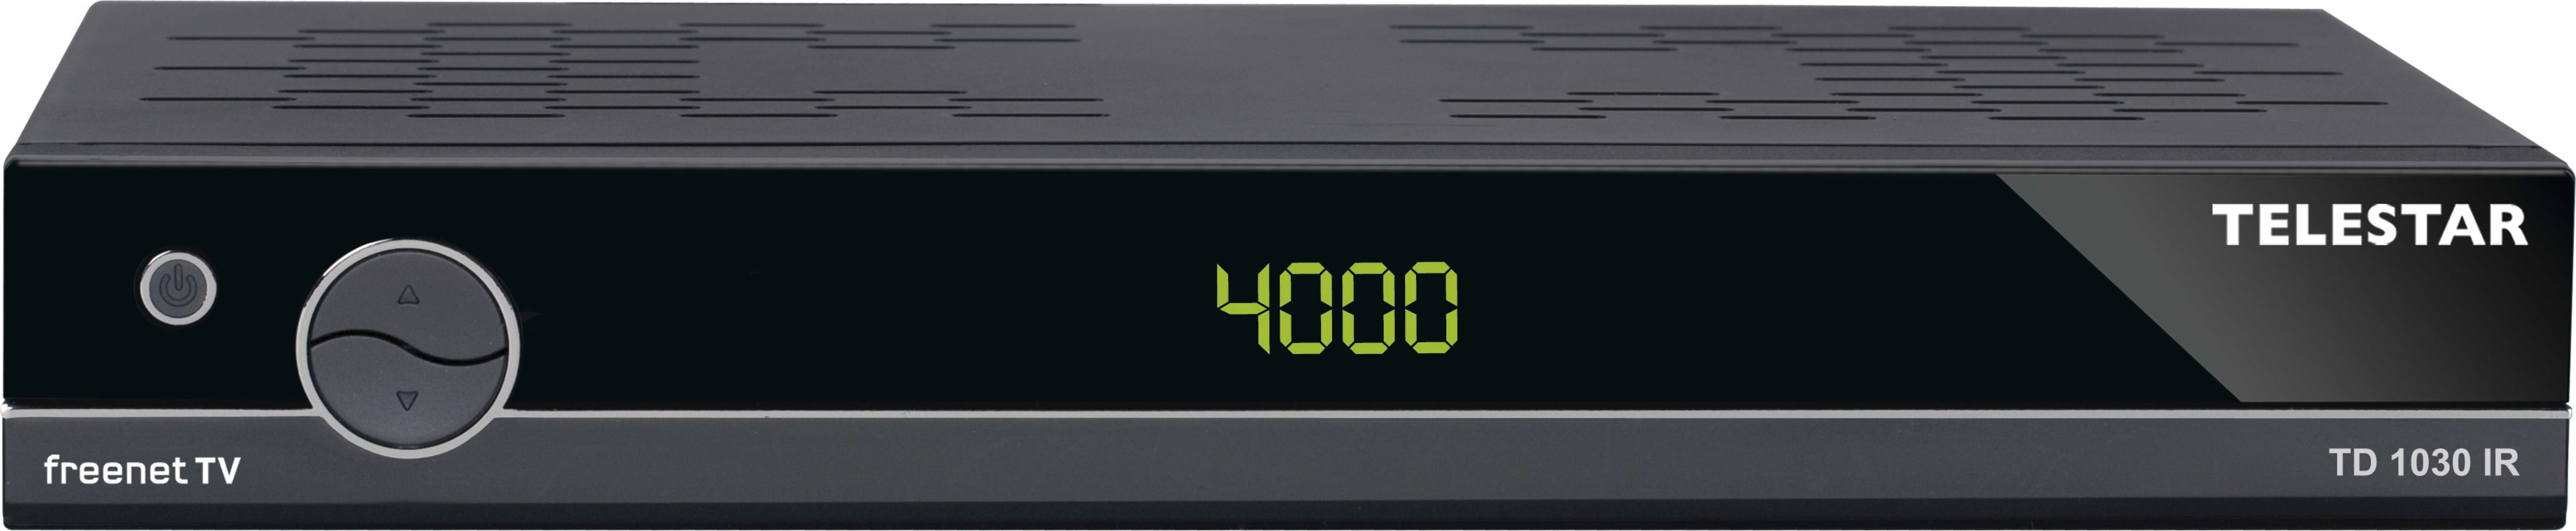 HD TD DVB-T2 TELESTAR 5310496 Receiver 1030 IR (H.265), (HDTV, DVB-T2 DVB-T, Schwarz)